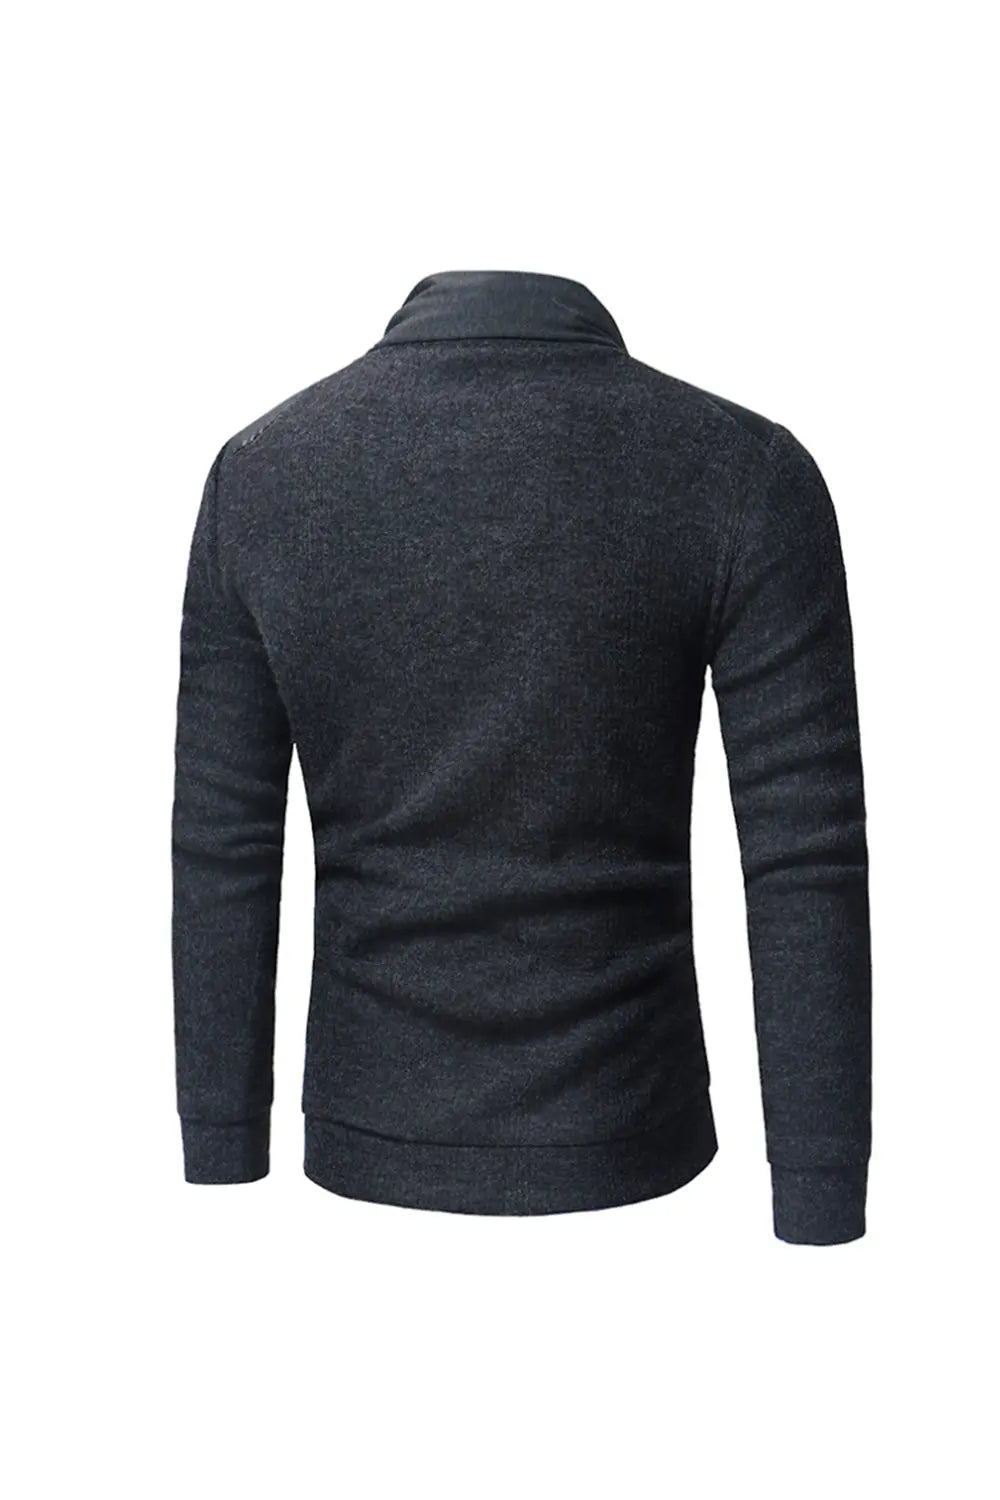 Crewneck Sweatshirt - Dark Gray - Strange Clothes